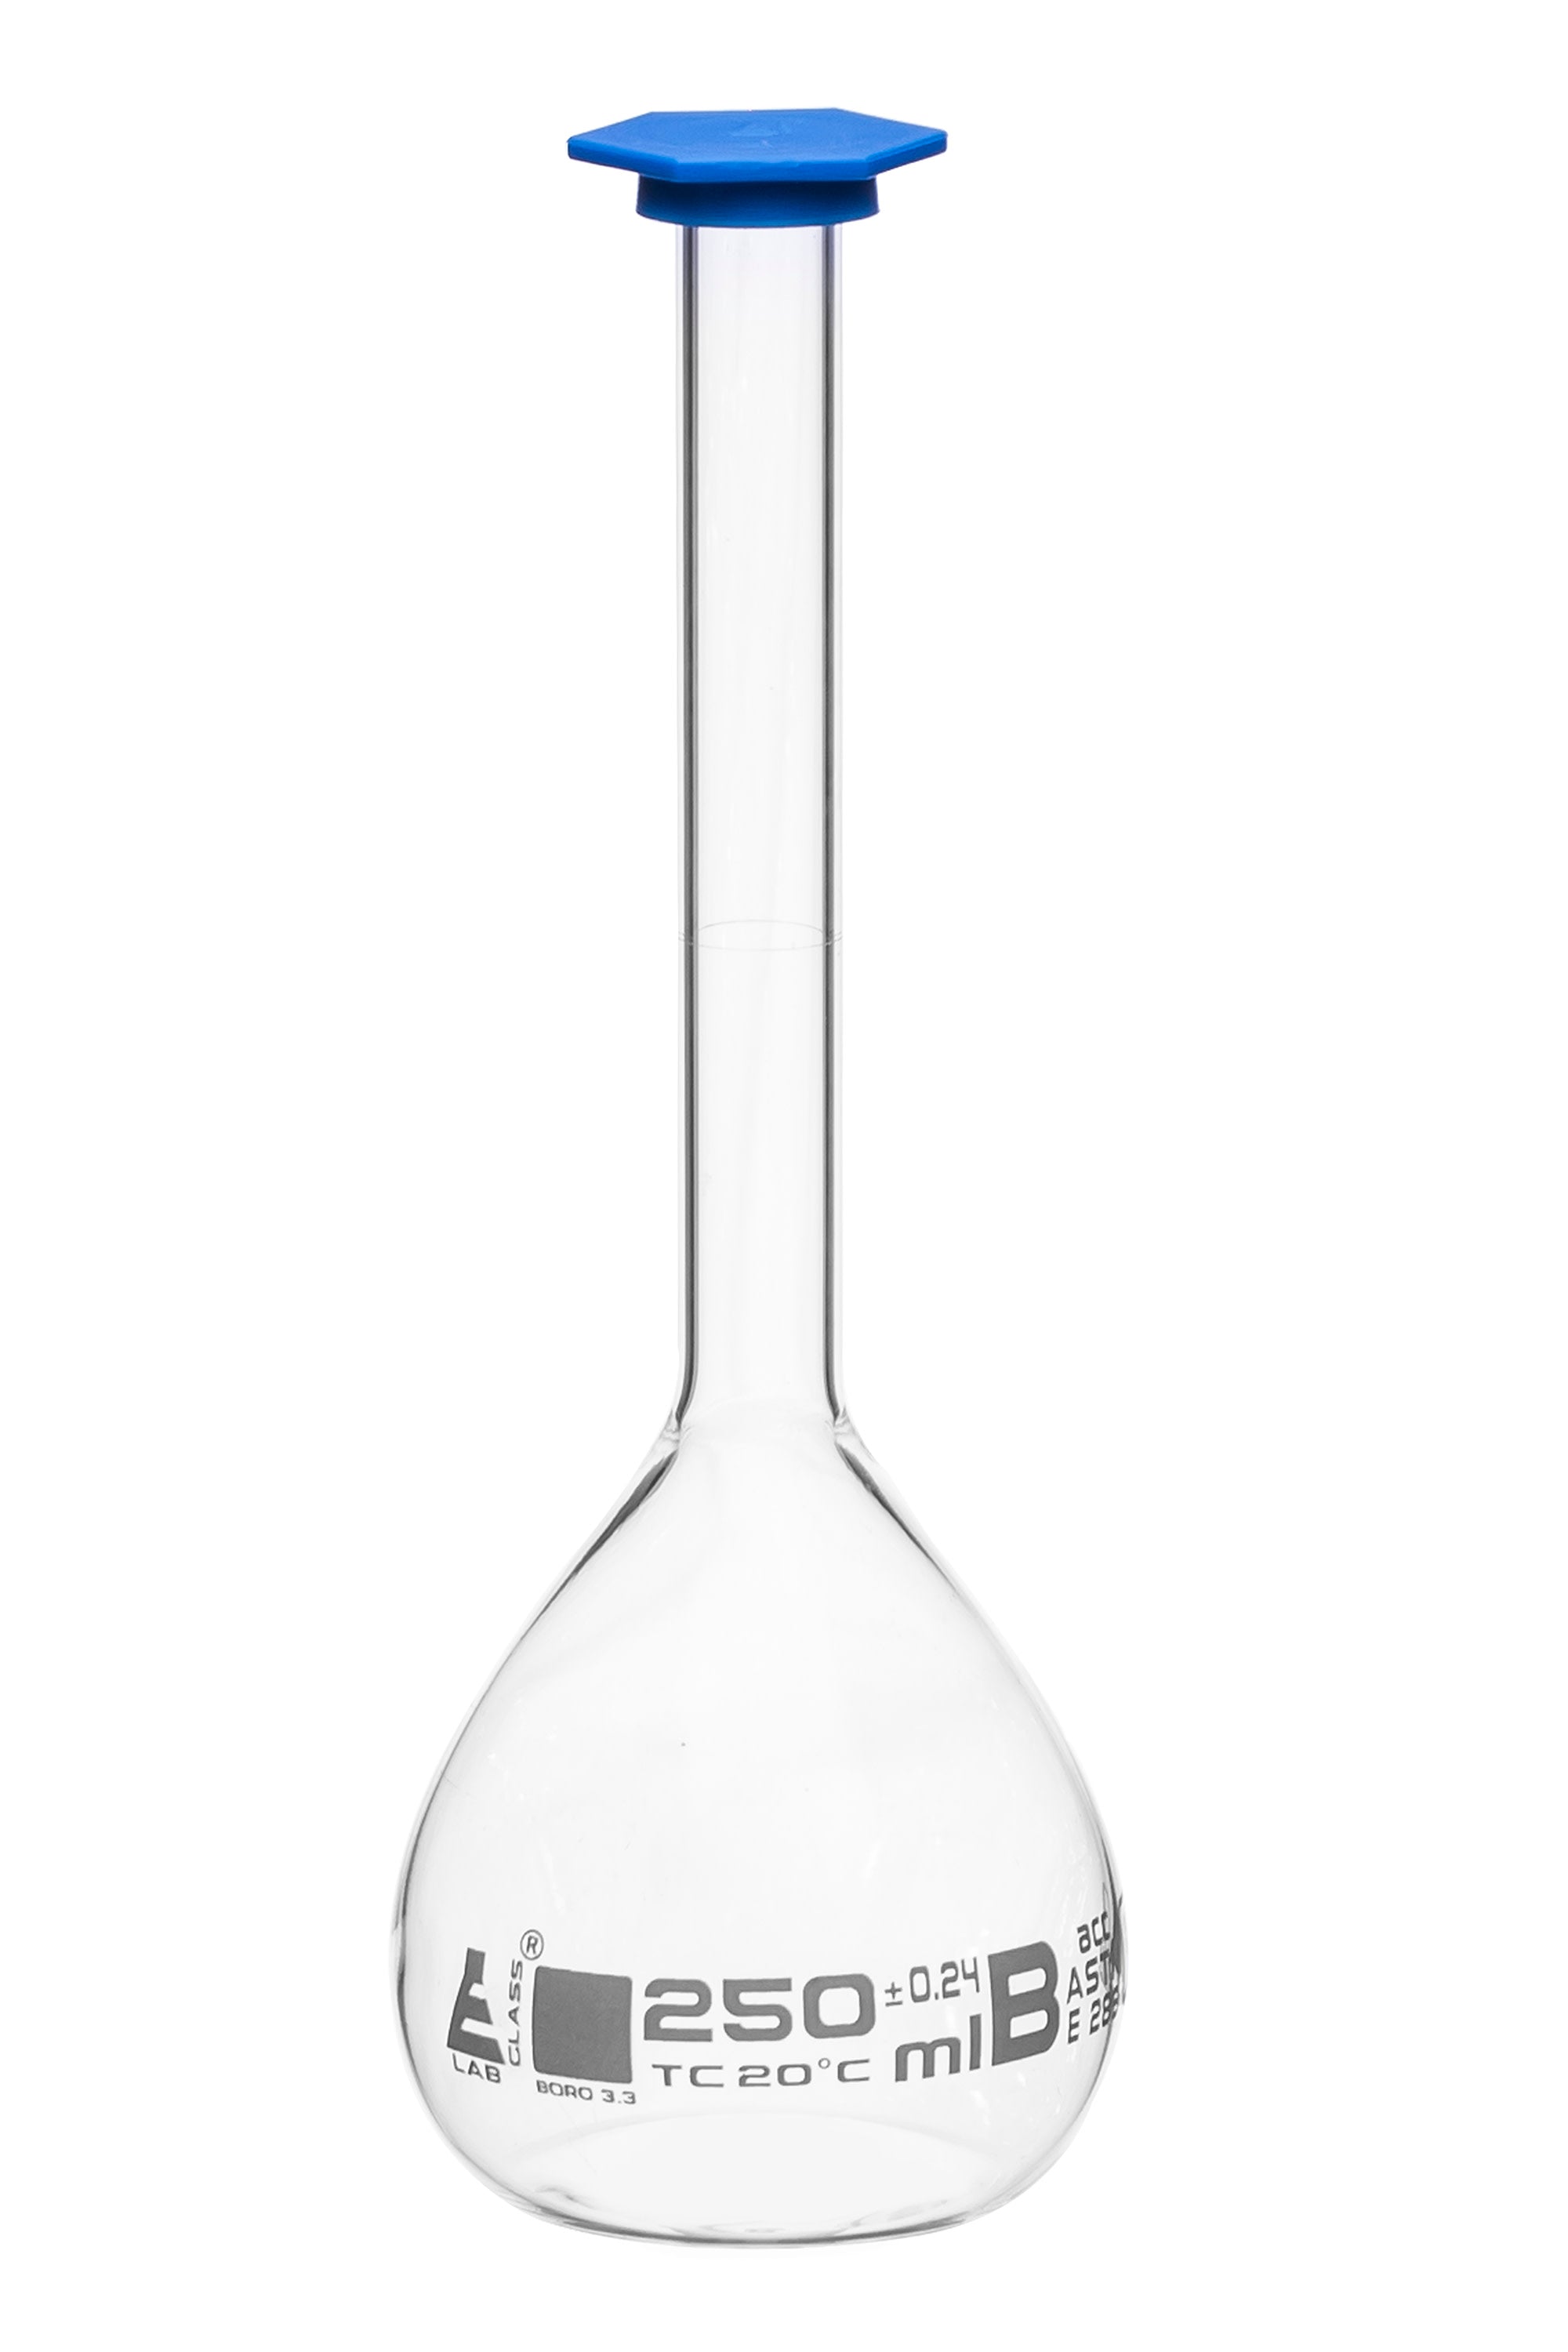 Borosilicate Volumetric Flask with Polyethylene Snap Cap, 250 ml, Class B, White Print, ASTM, Autoclavable